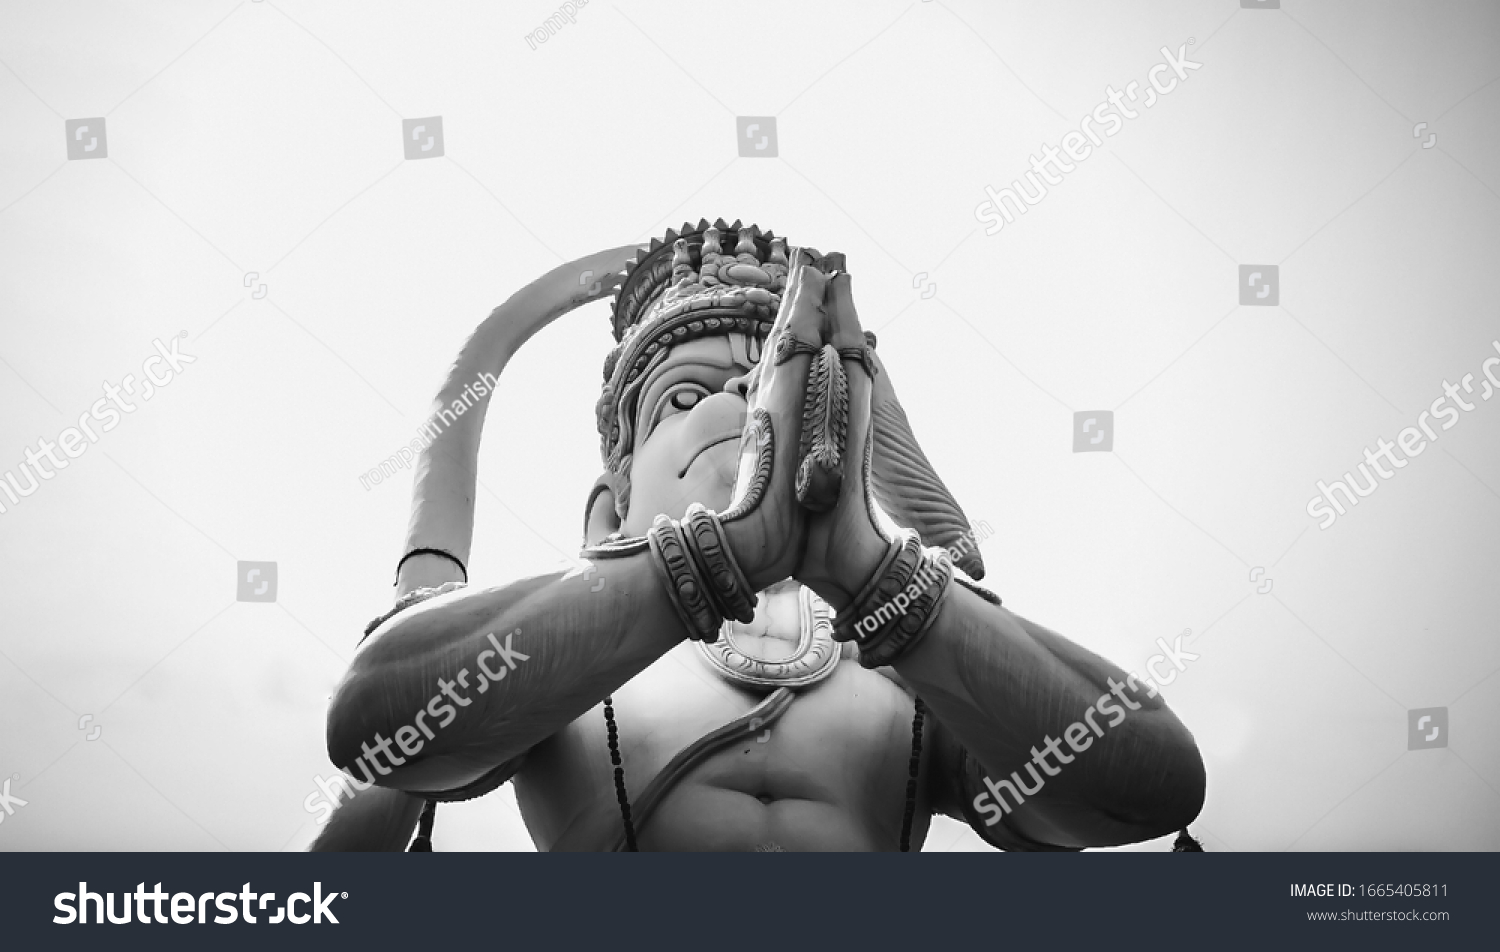 Hanuman statue isolated on white background lord hanuman statue at gajuwaka vizag city #1665405811